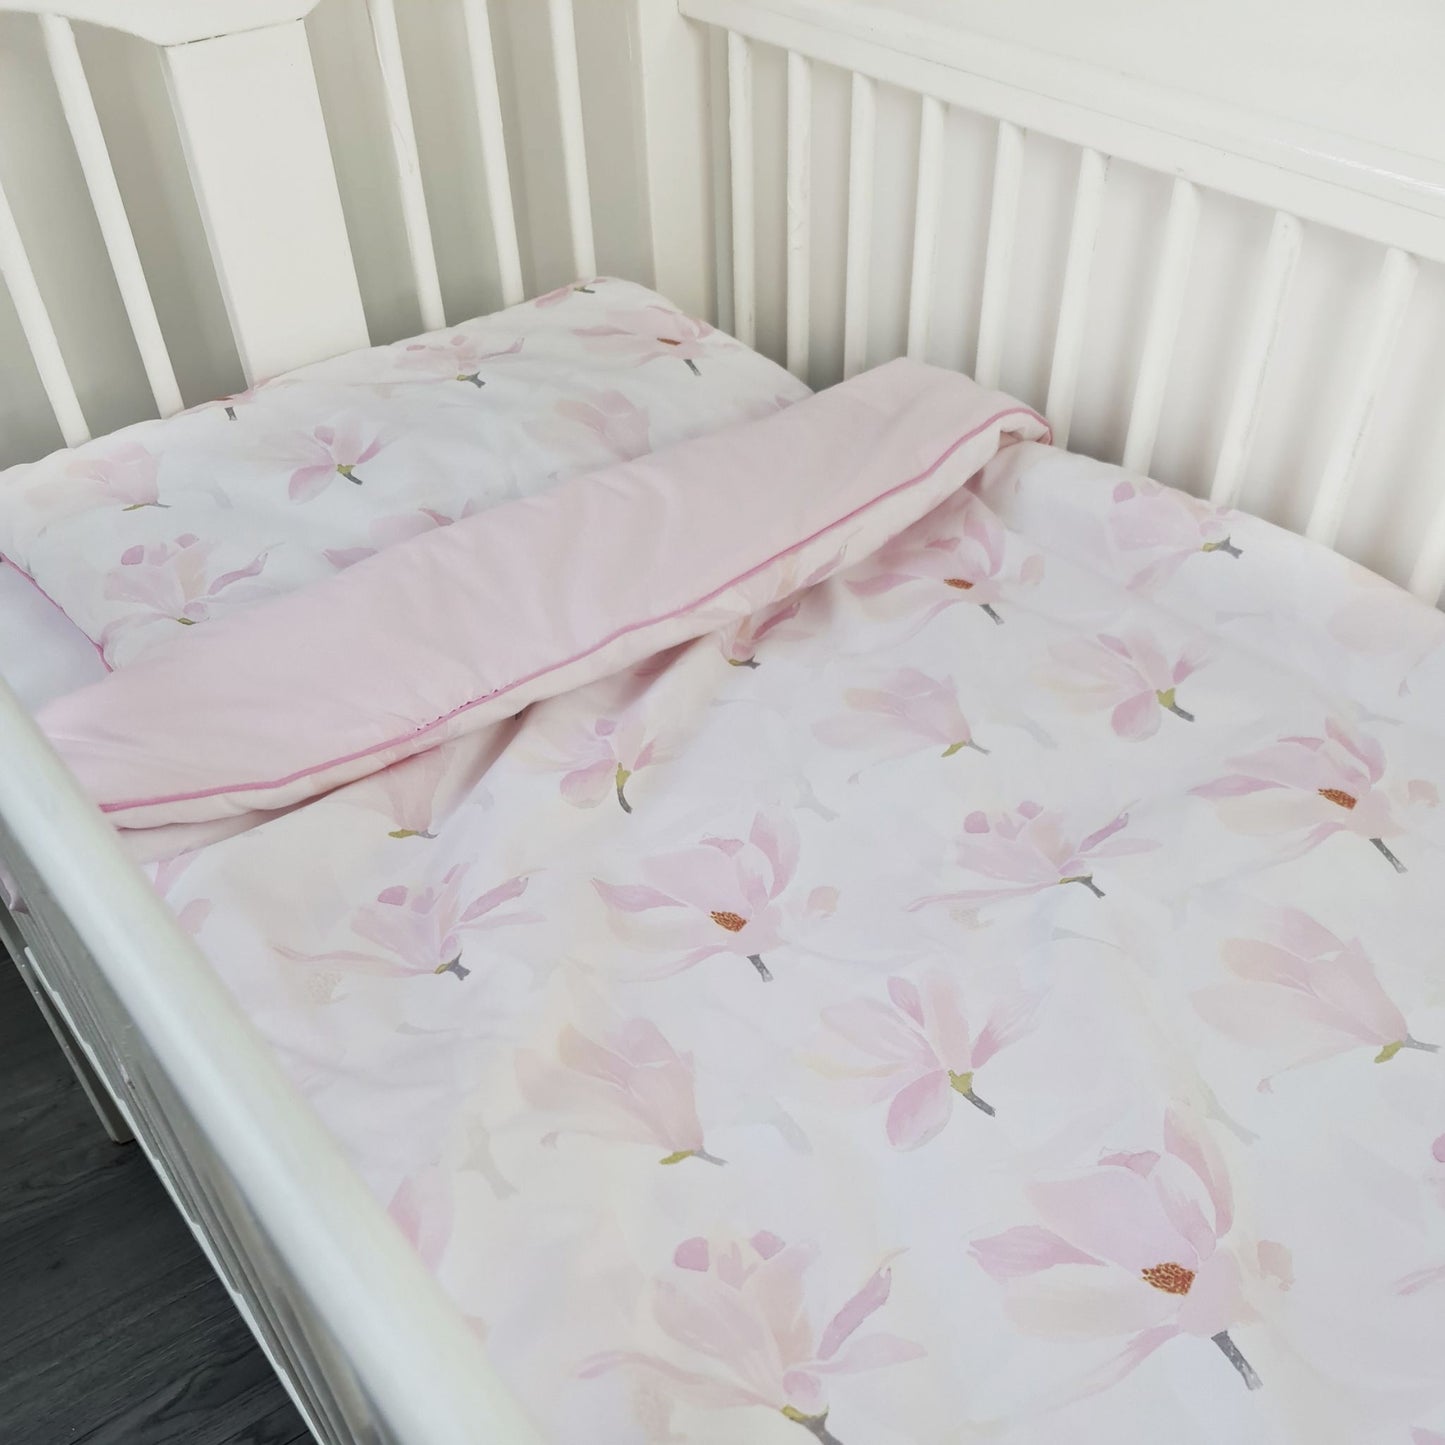 Children Quilt & Pillow Set- Bedding For Cot Bed - Magnolia Blossom